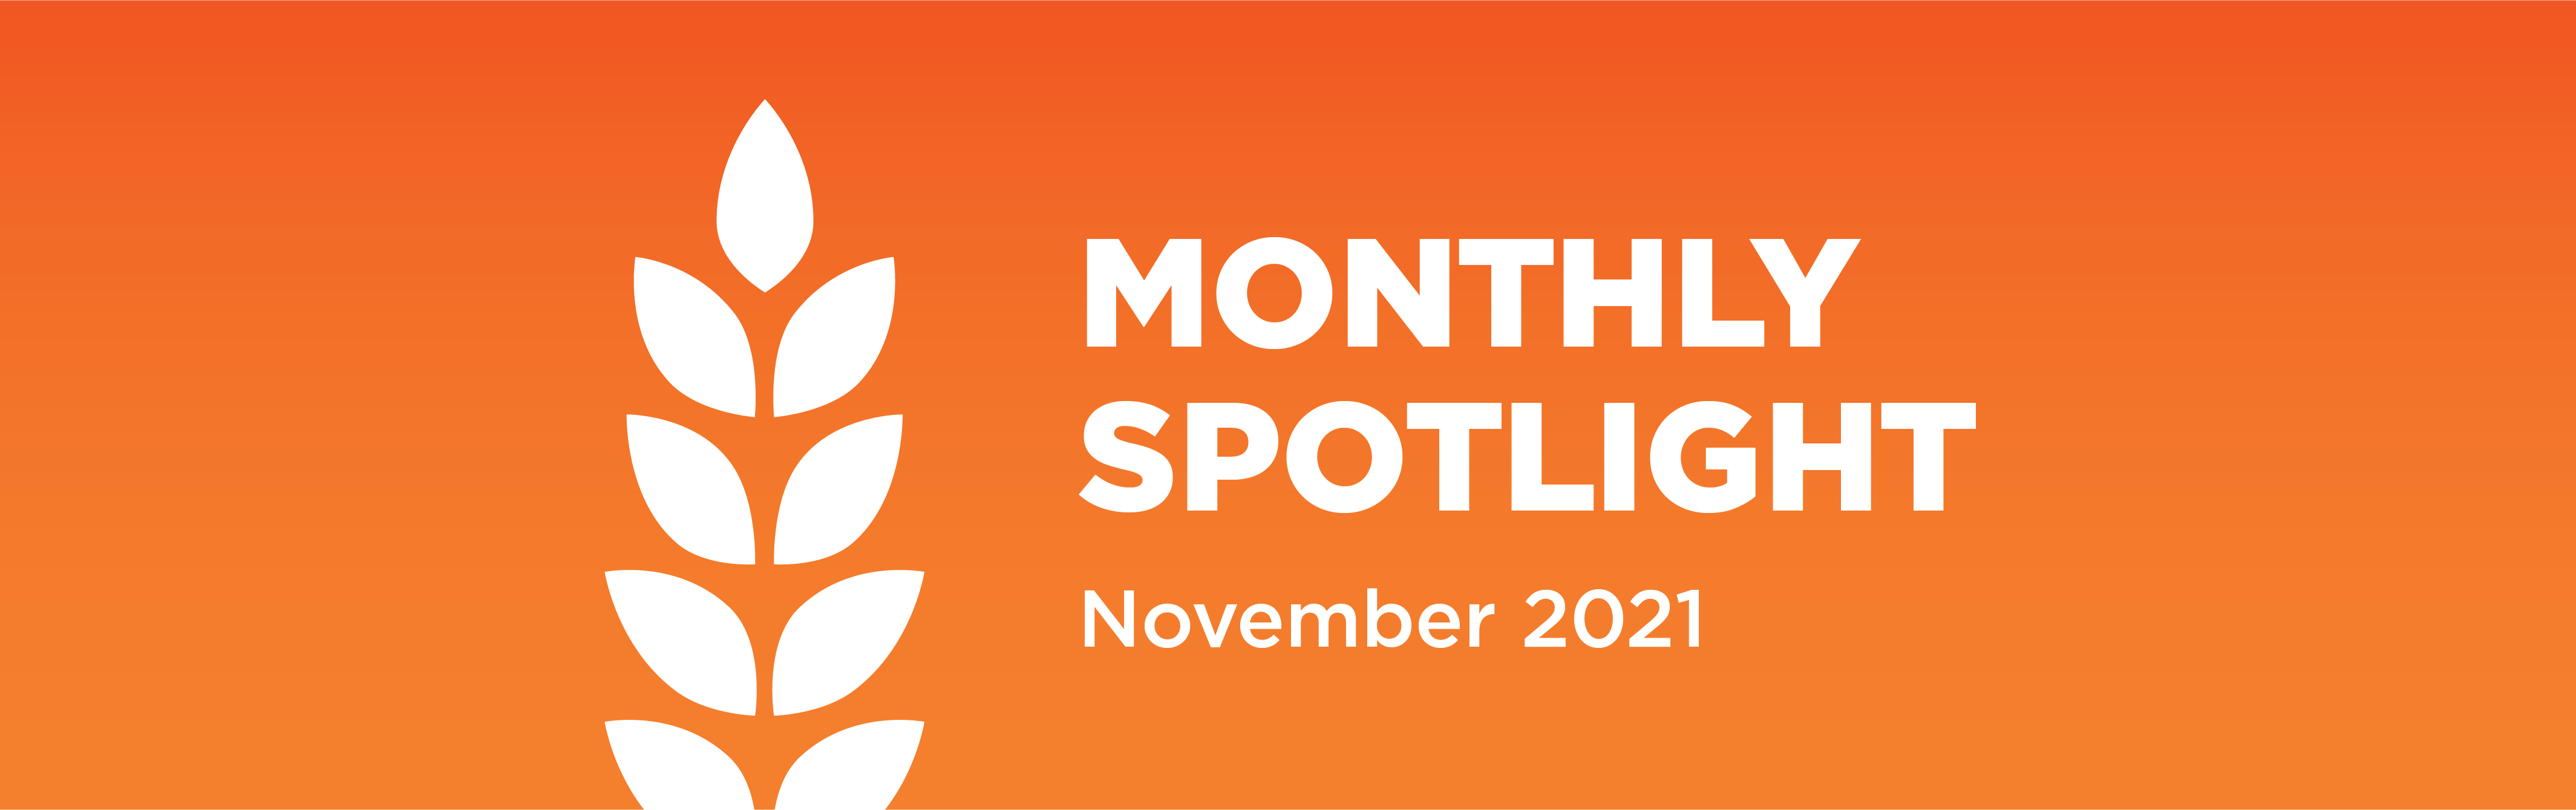 Feeding South Florida's Monthly Spotlight: November